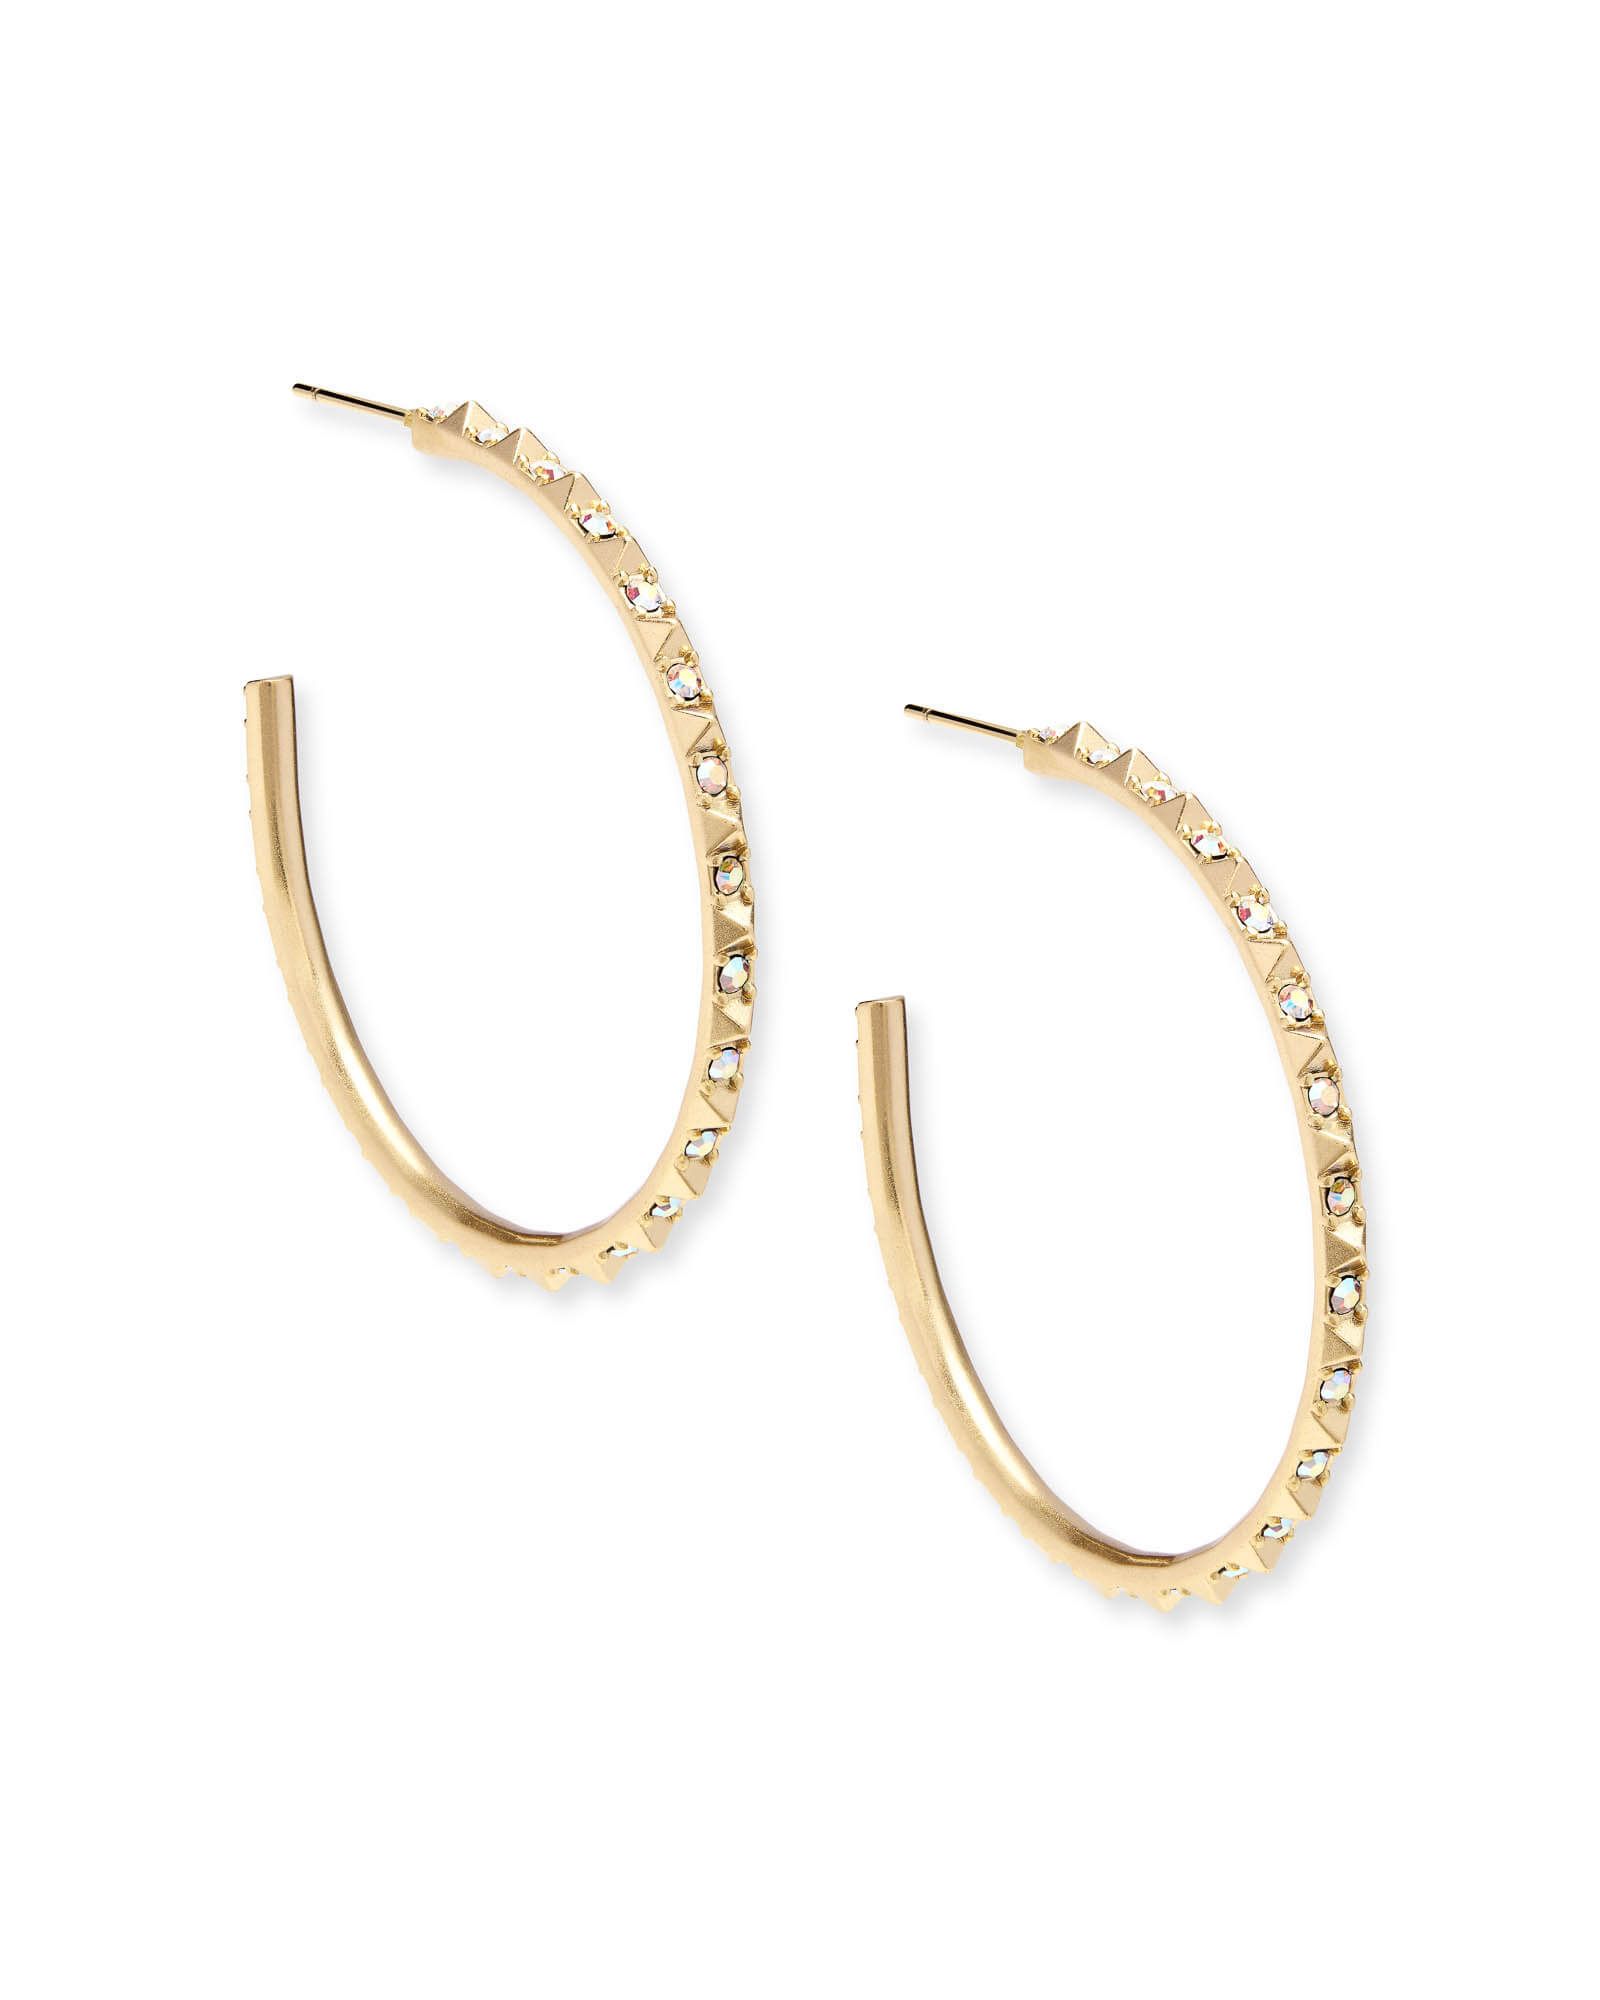 Veronica Gold Hoop Earrings in Iridescent Crystal | Kendra Scott